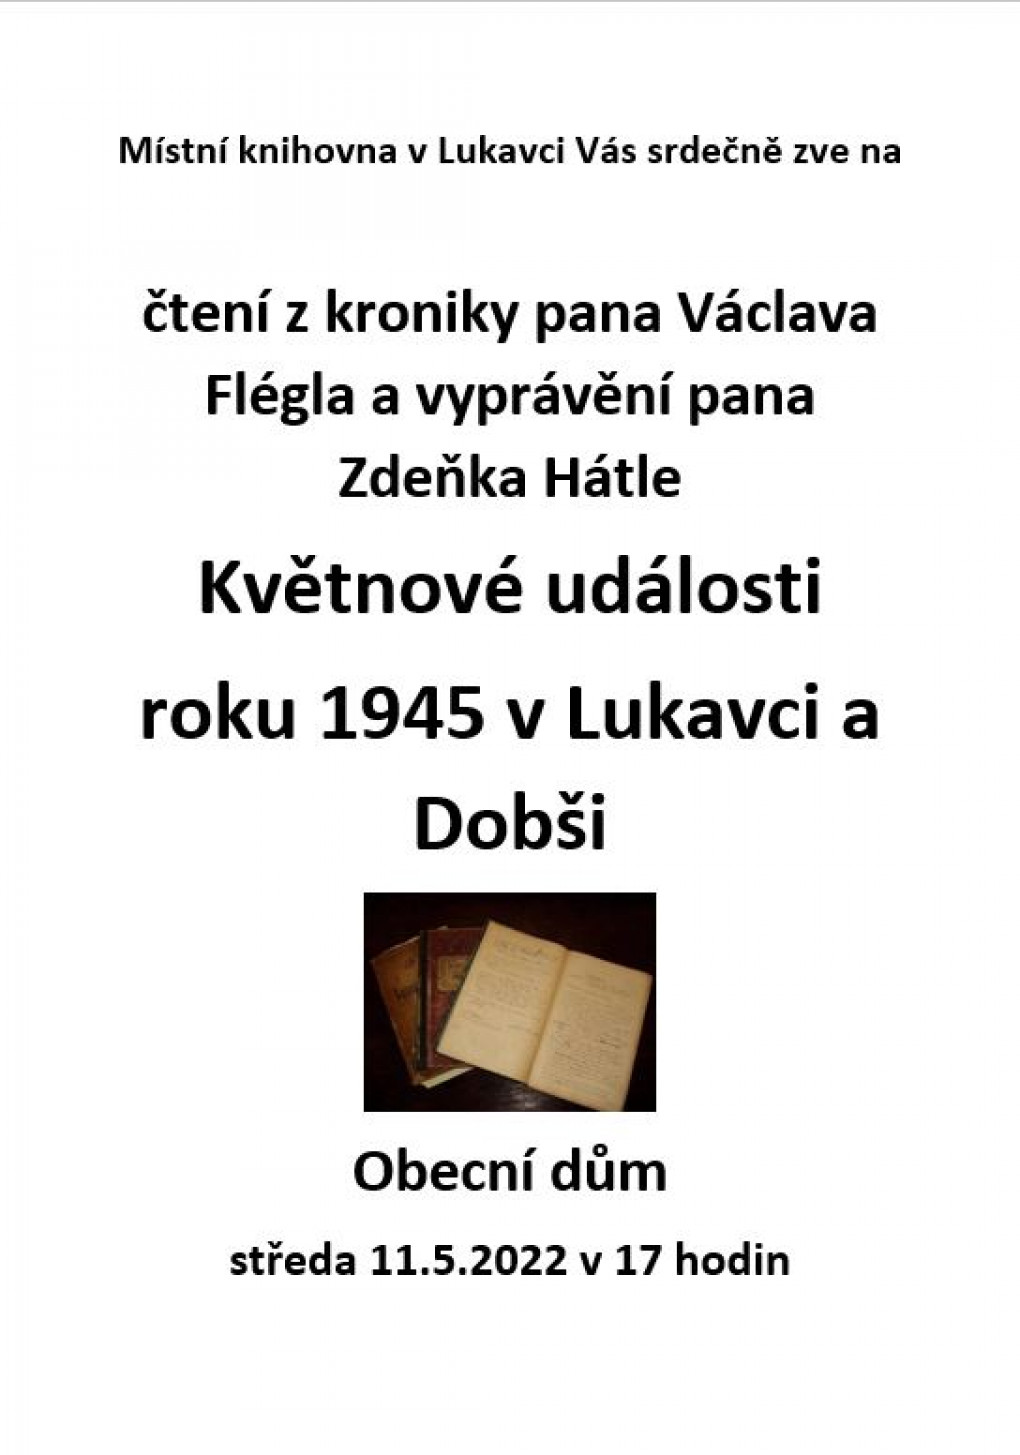 rok_1945_v_lukavci_a_dobsi.jpg